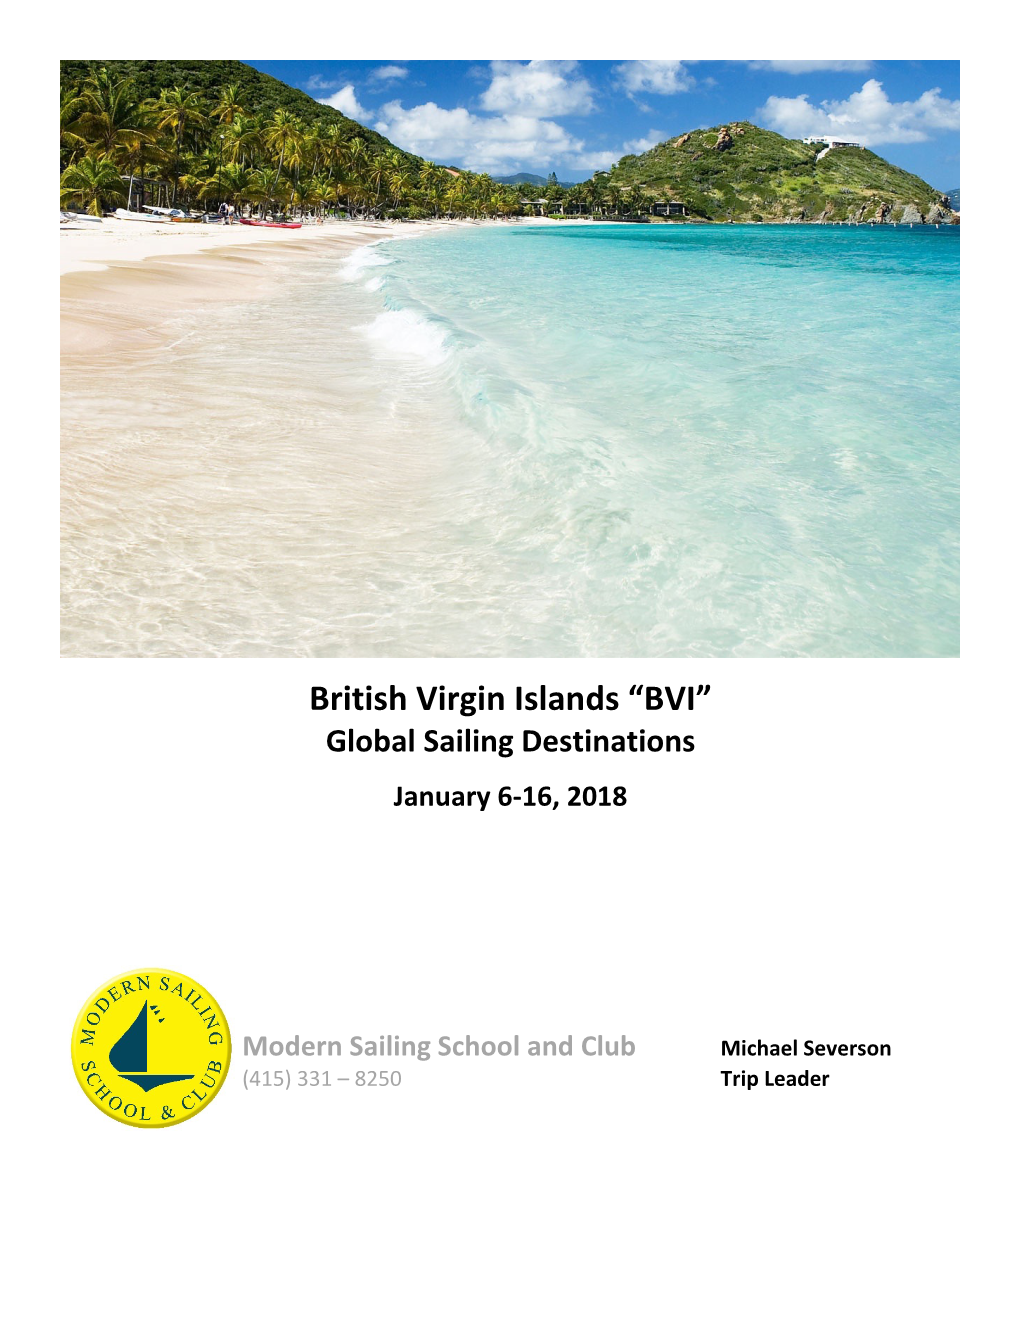 BVI” Global Sailing Destinations January 6-16, 2018